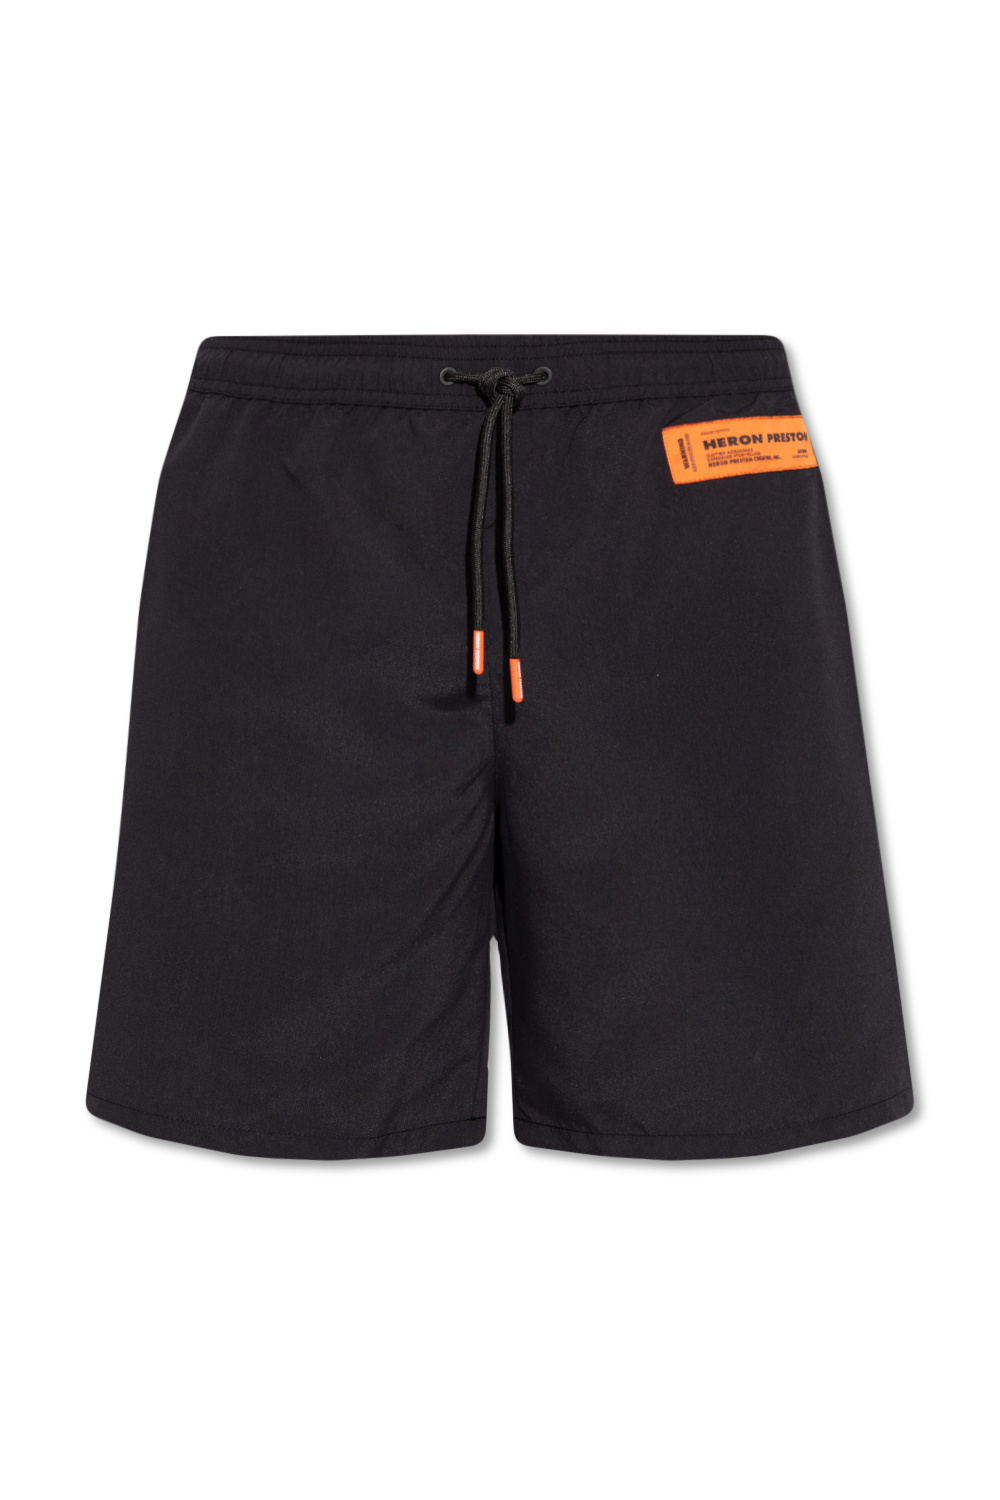 Heron Preston Swimming shorts, Men's Clothing, IetpShops